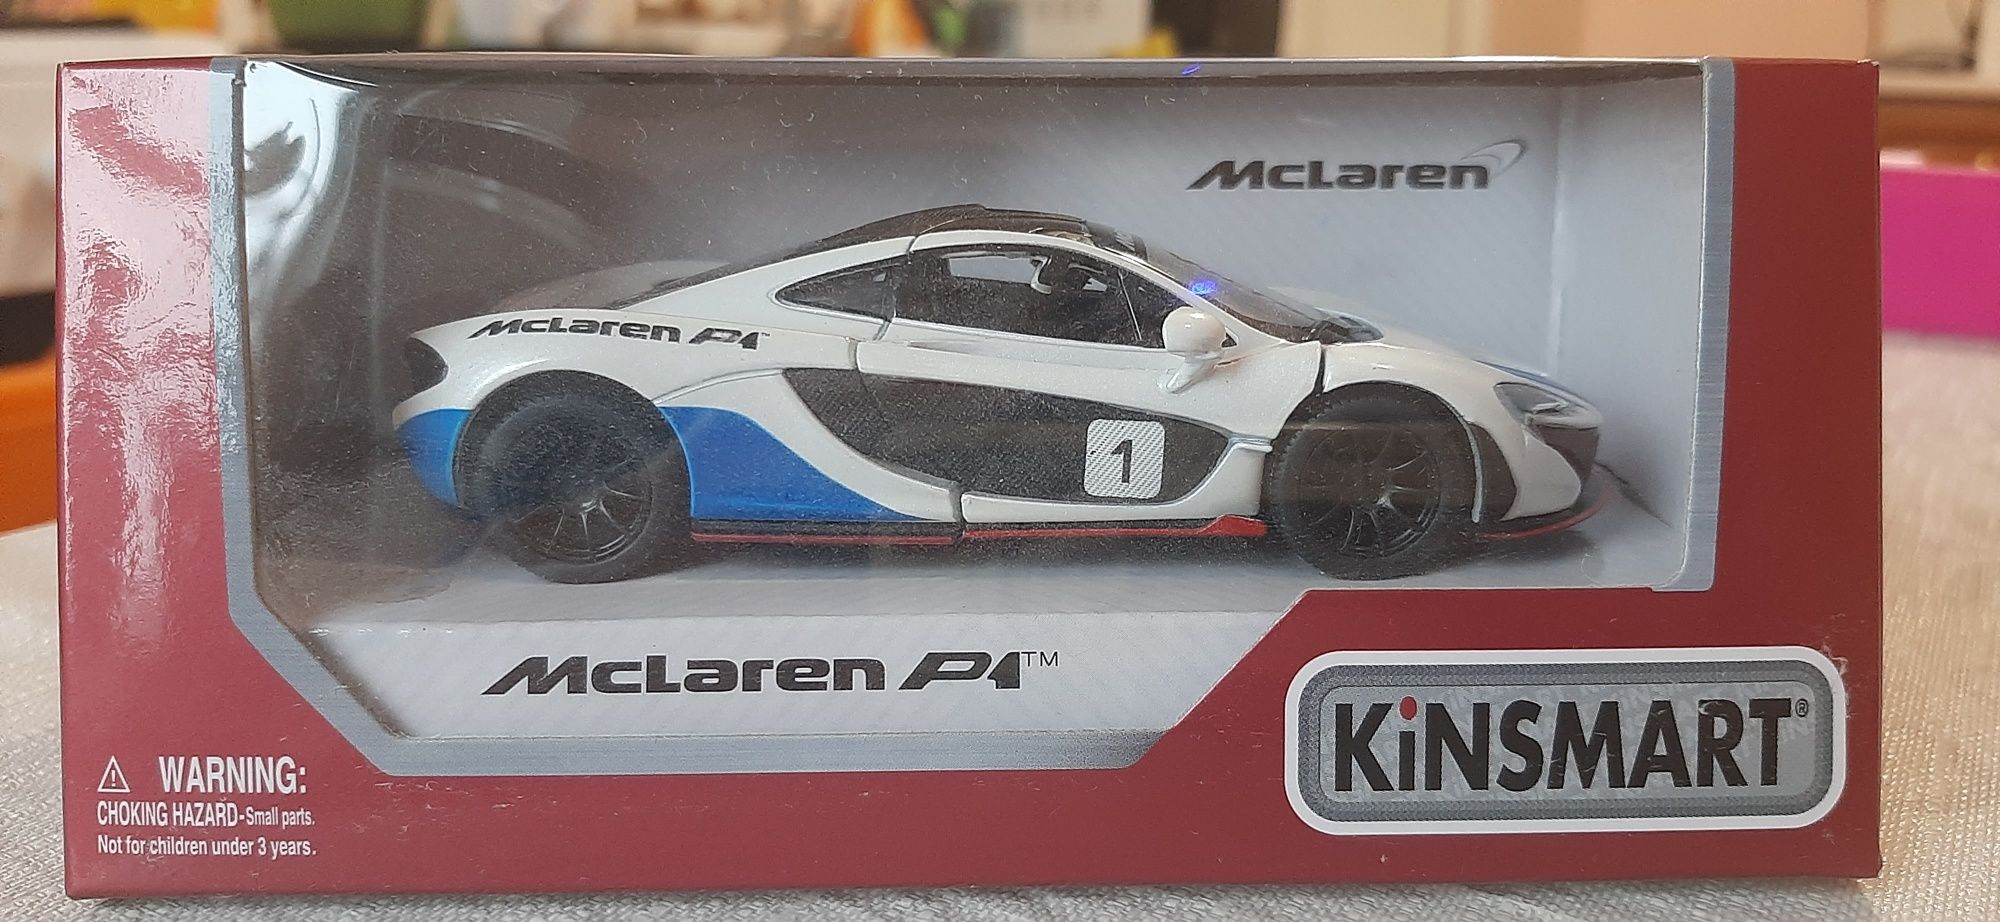 McLaren P4 моделька іграшка